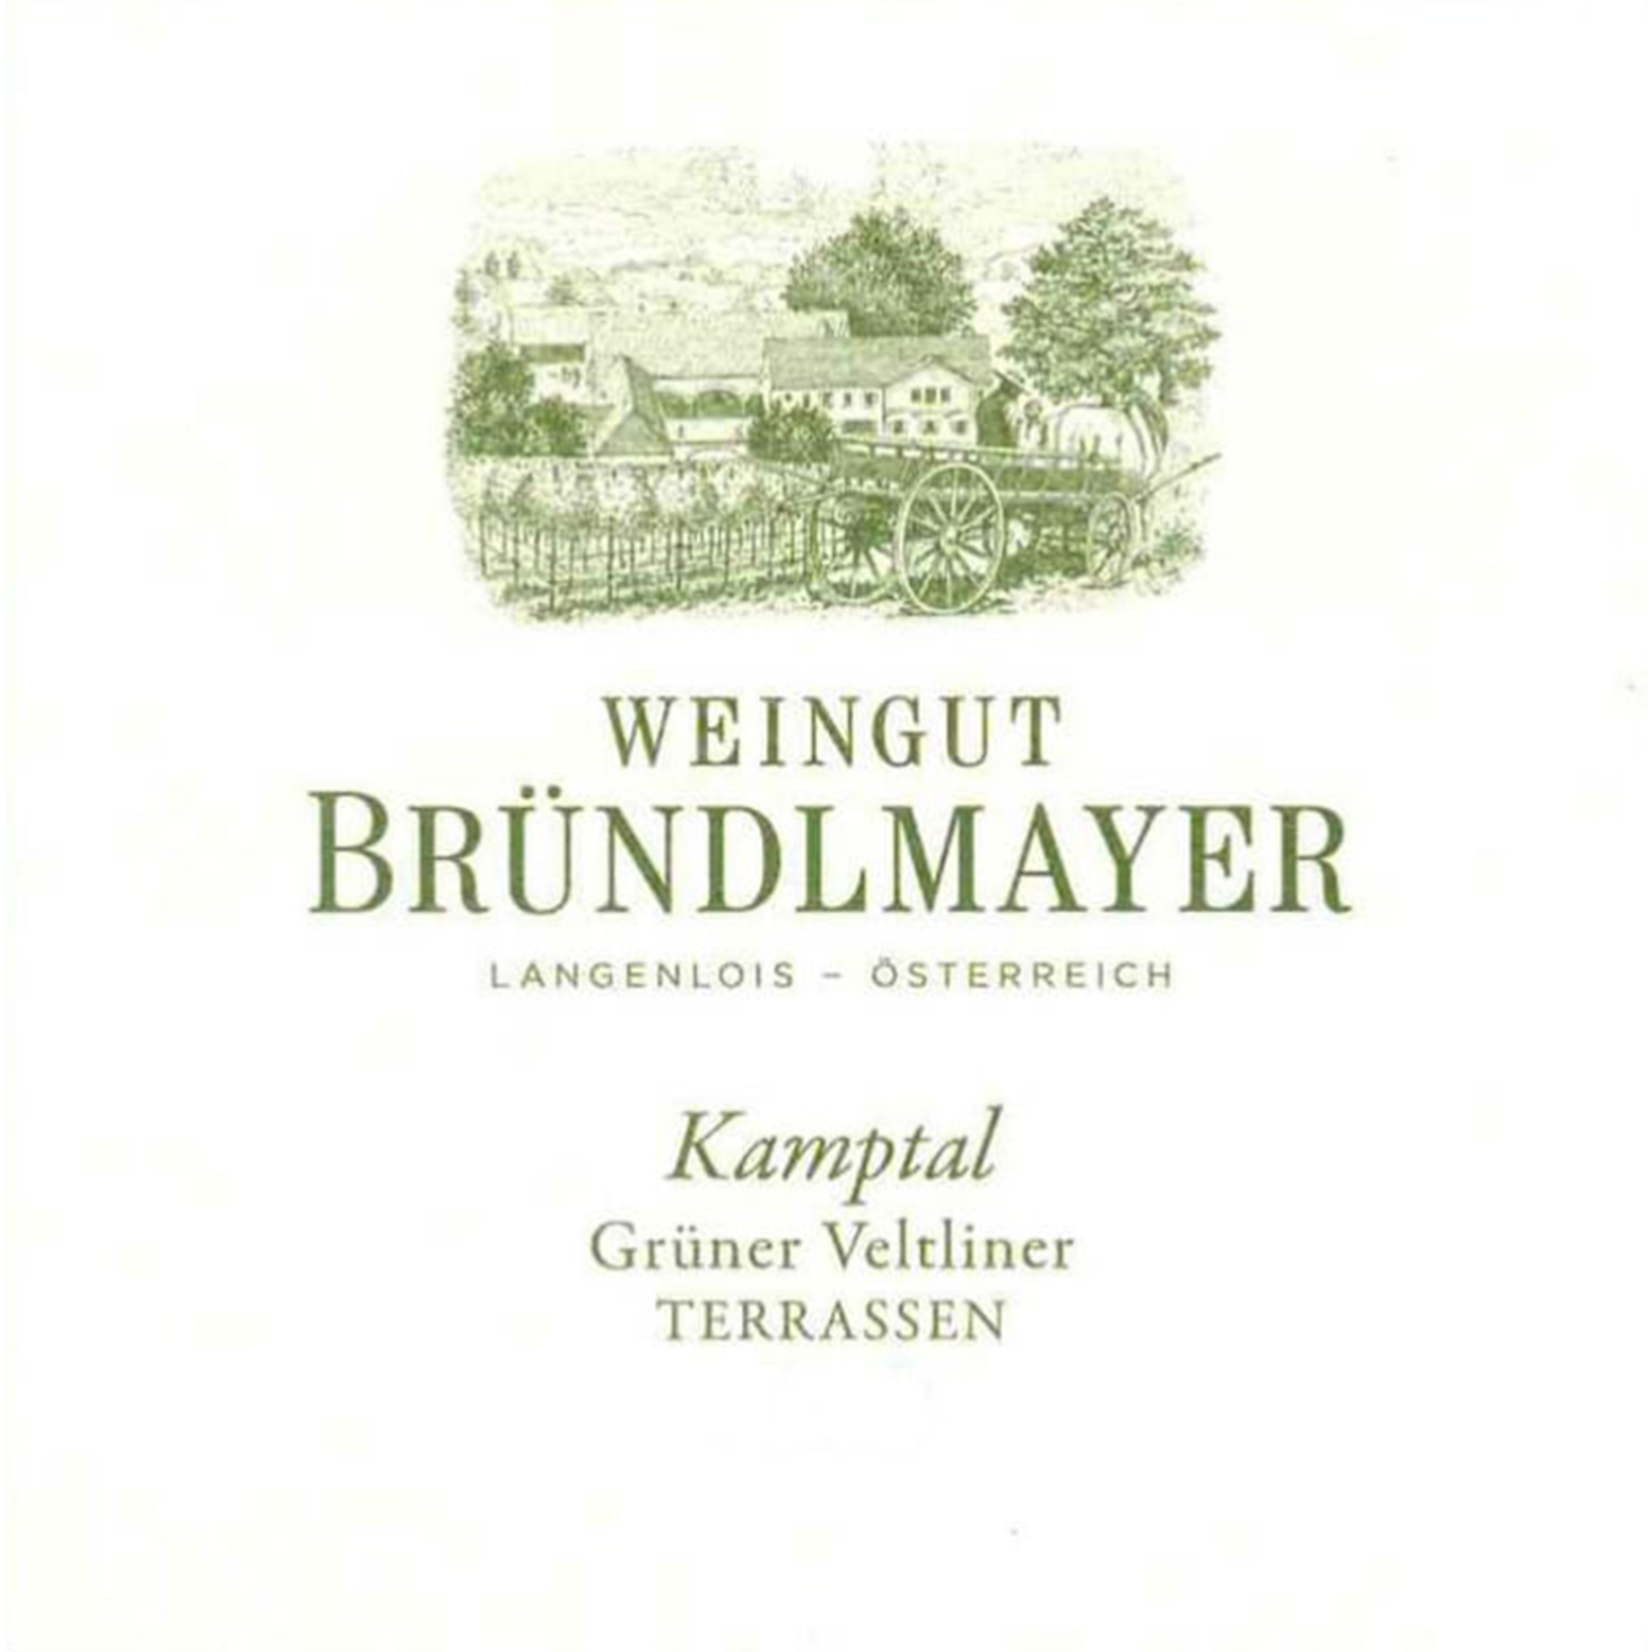 Weingut Bründlmayer Gruner Veltliner "Kamptaler Terrassen" Brundlmayer 375 ml 2021